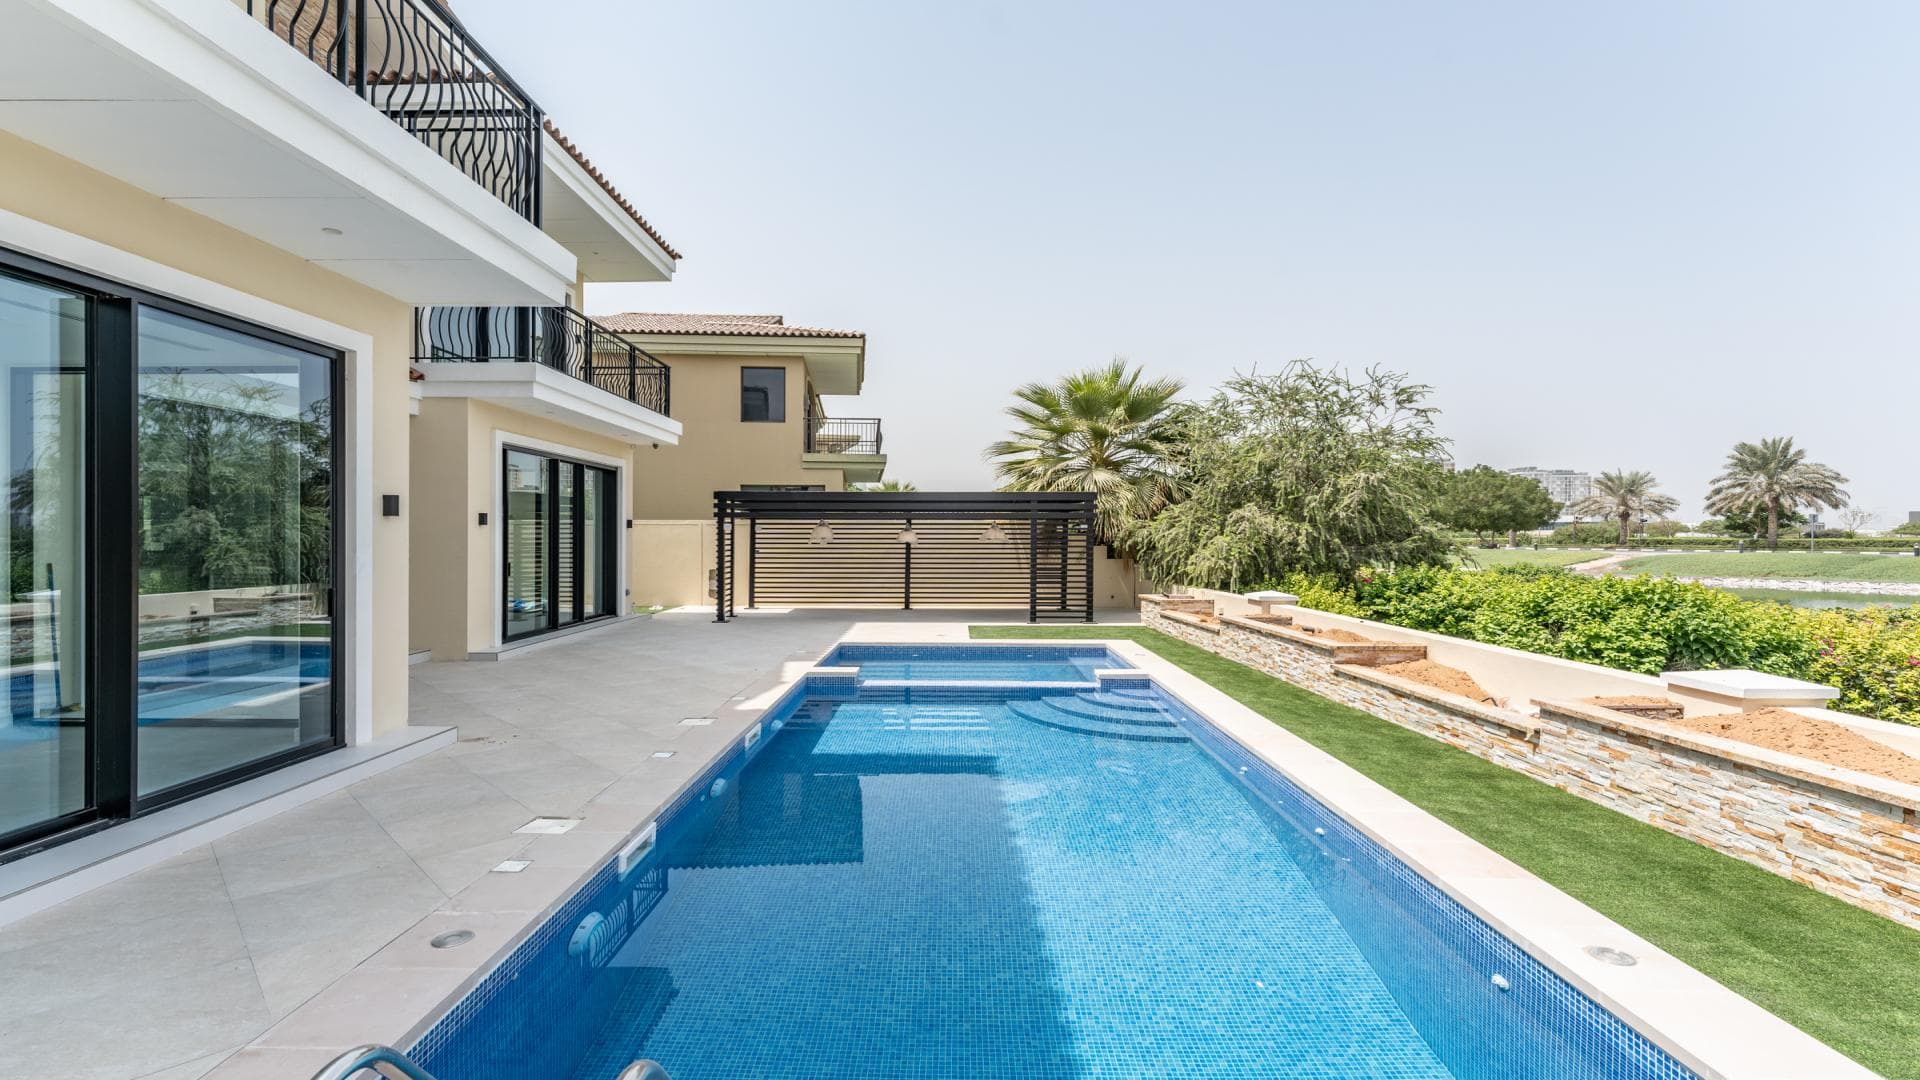 5 Bedroom Villa For Sale Al Thamam 01 Lp37313 77a59409f0aefc0.jpg